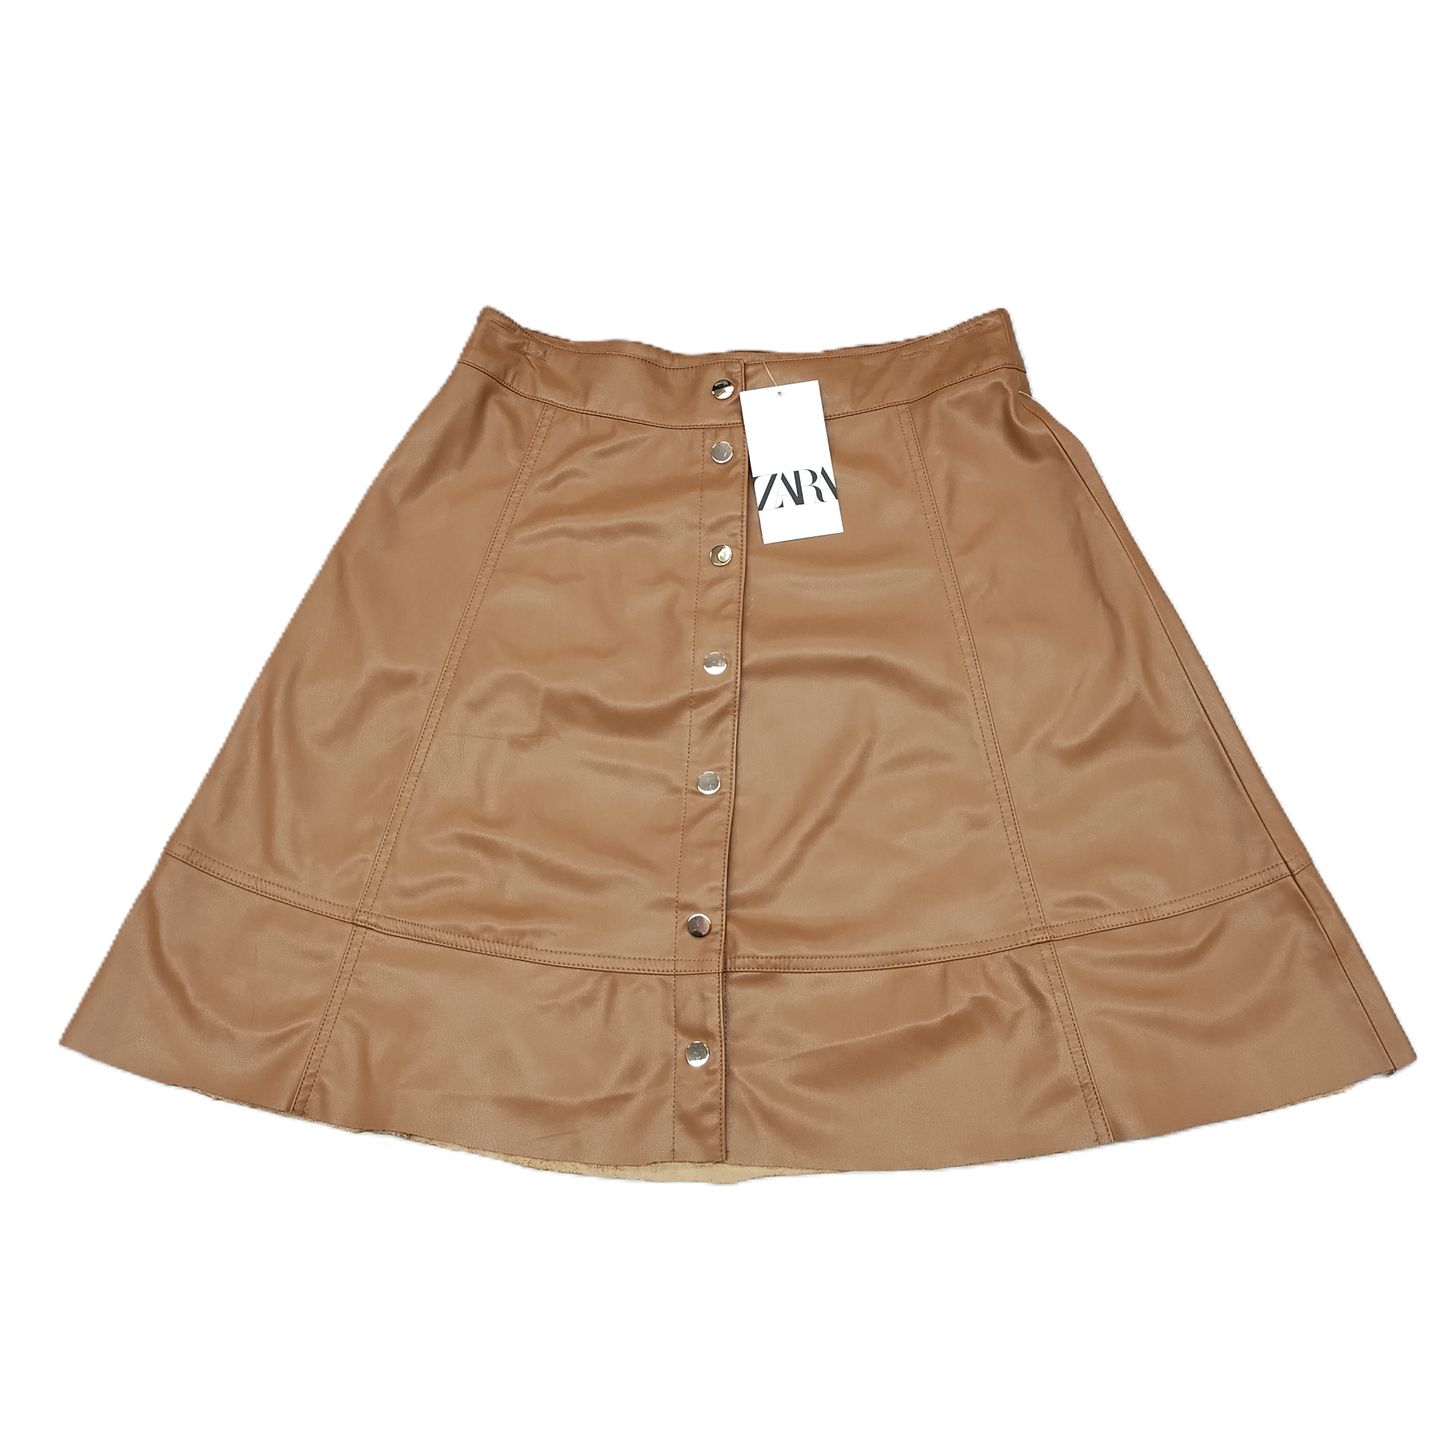 Skirt Midi By Zara  Size: L